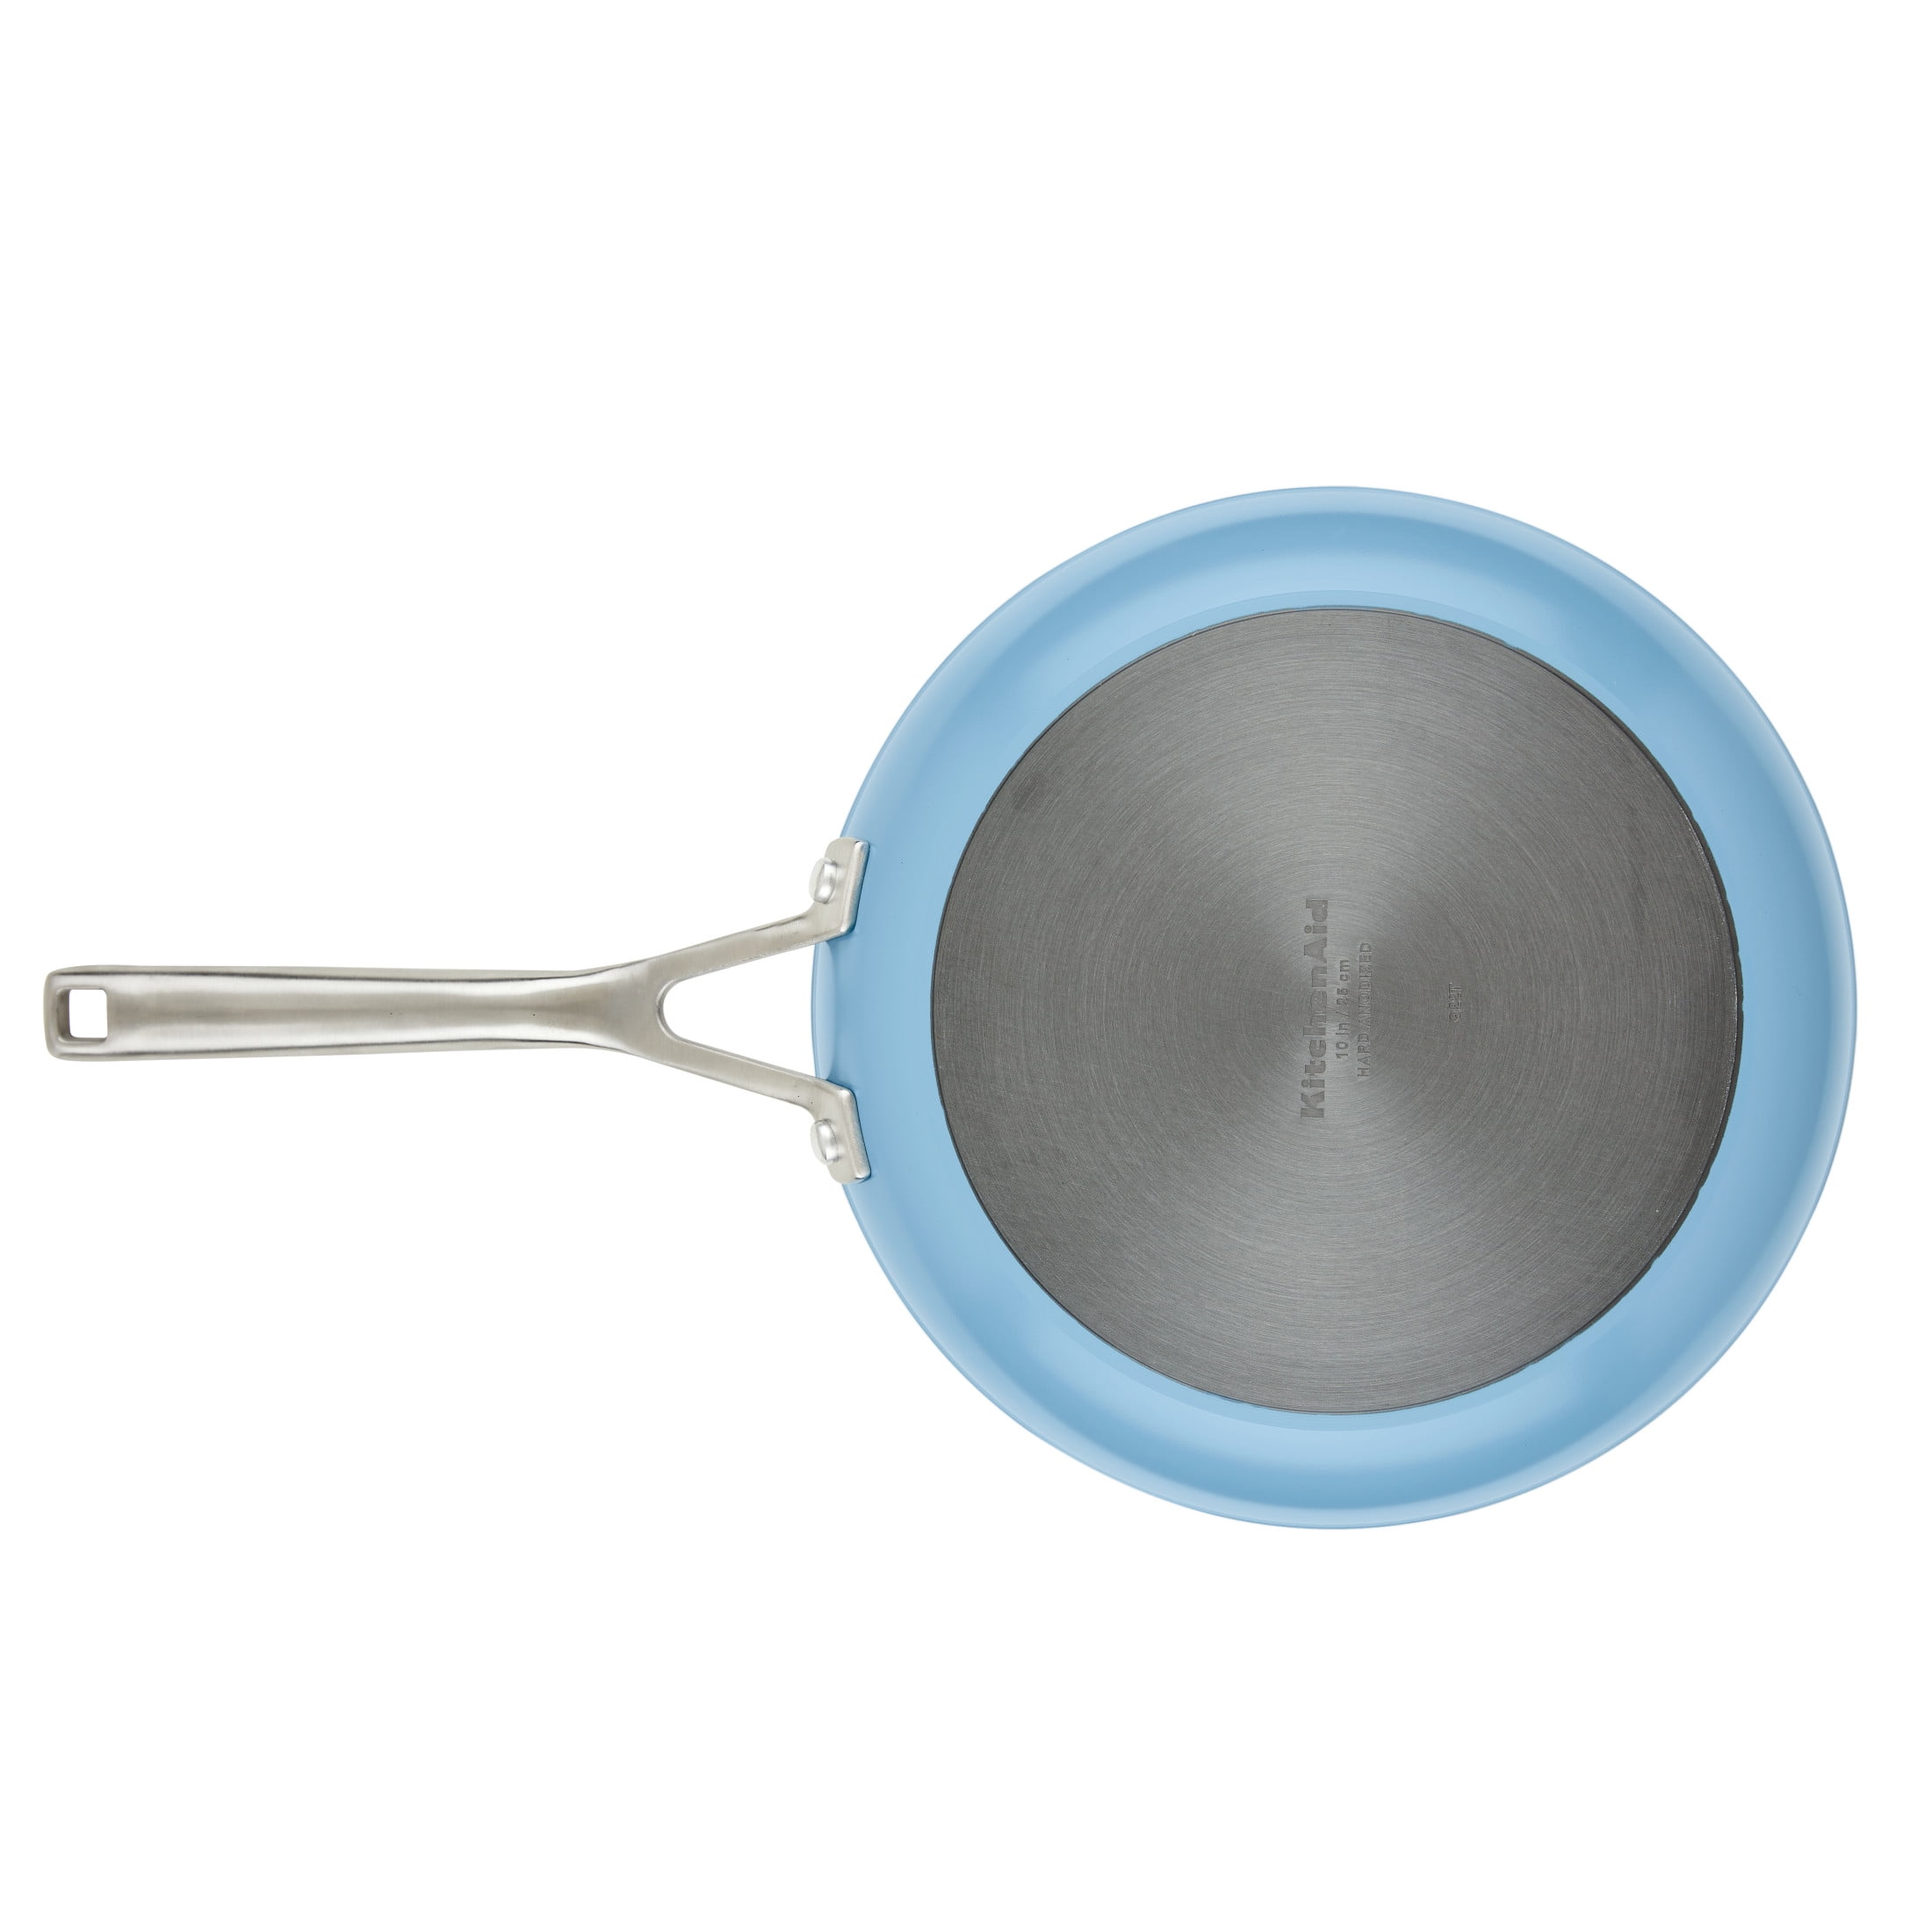 KitchenAid Architect® 10-Pc. Non-Stick Pour & Strain Cookware Set, Created  for Macy's - Macy's